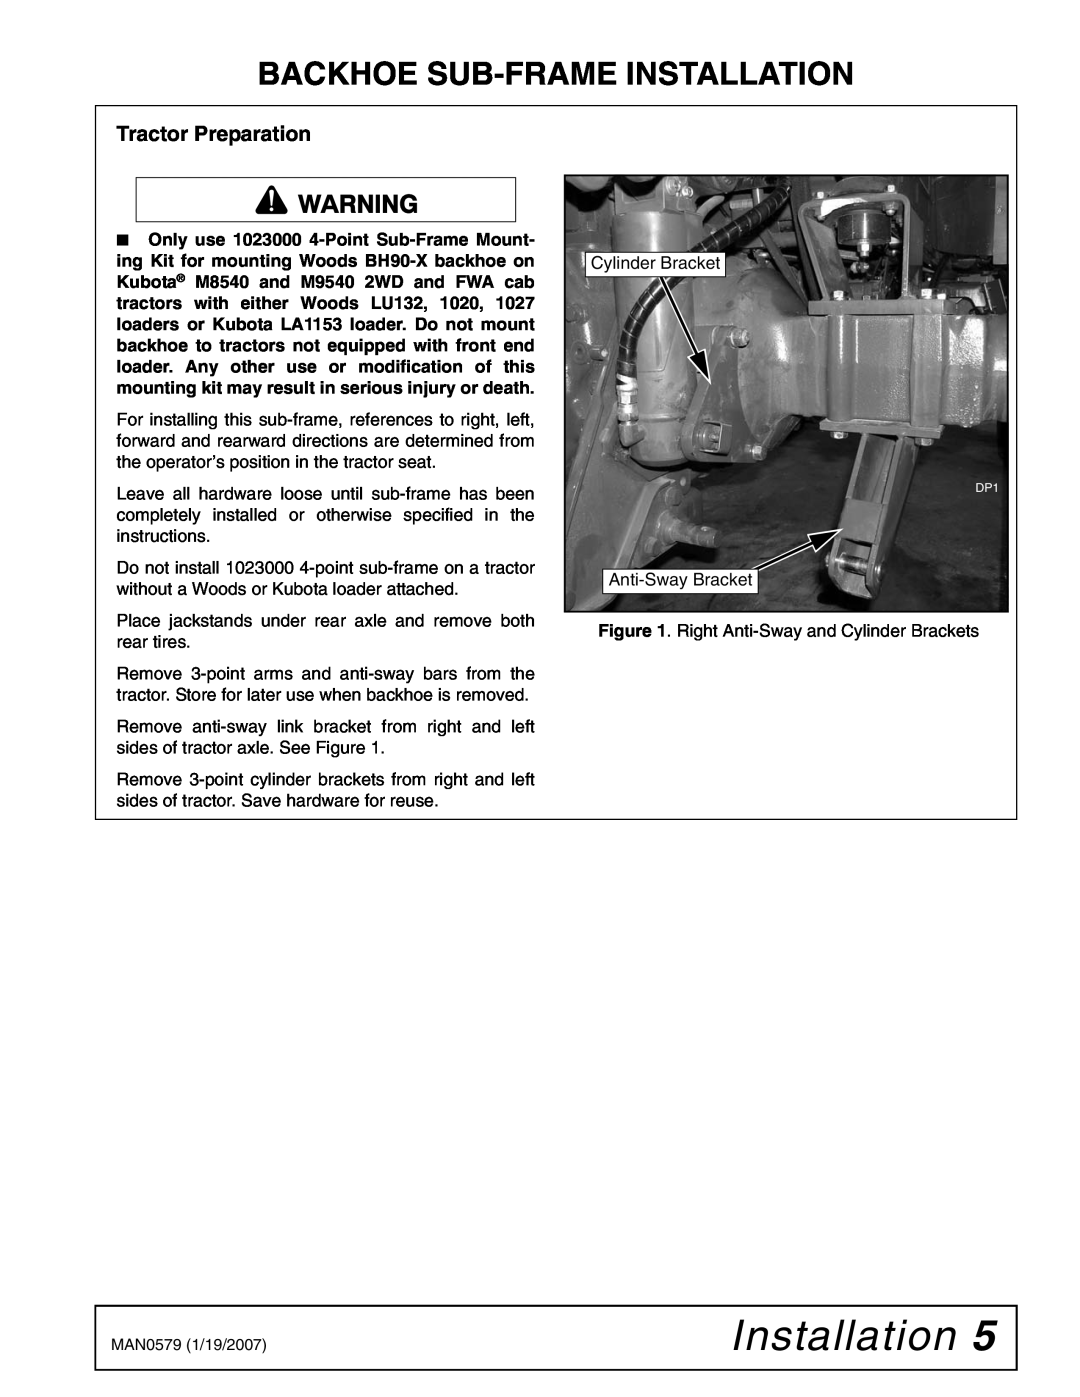 Woods Equipment 1023000 installation manual Installation, Tractor Preparation 